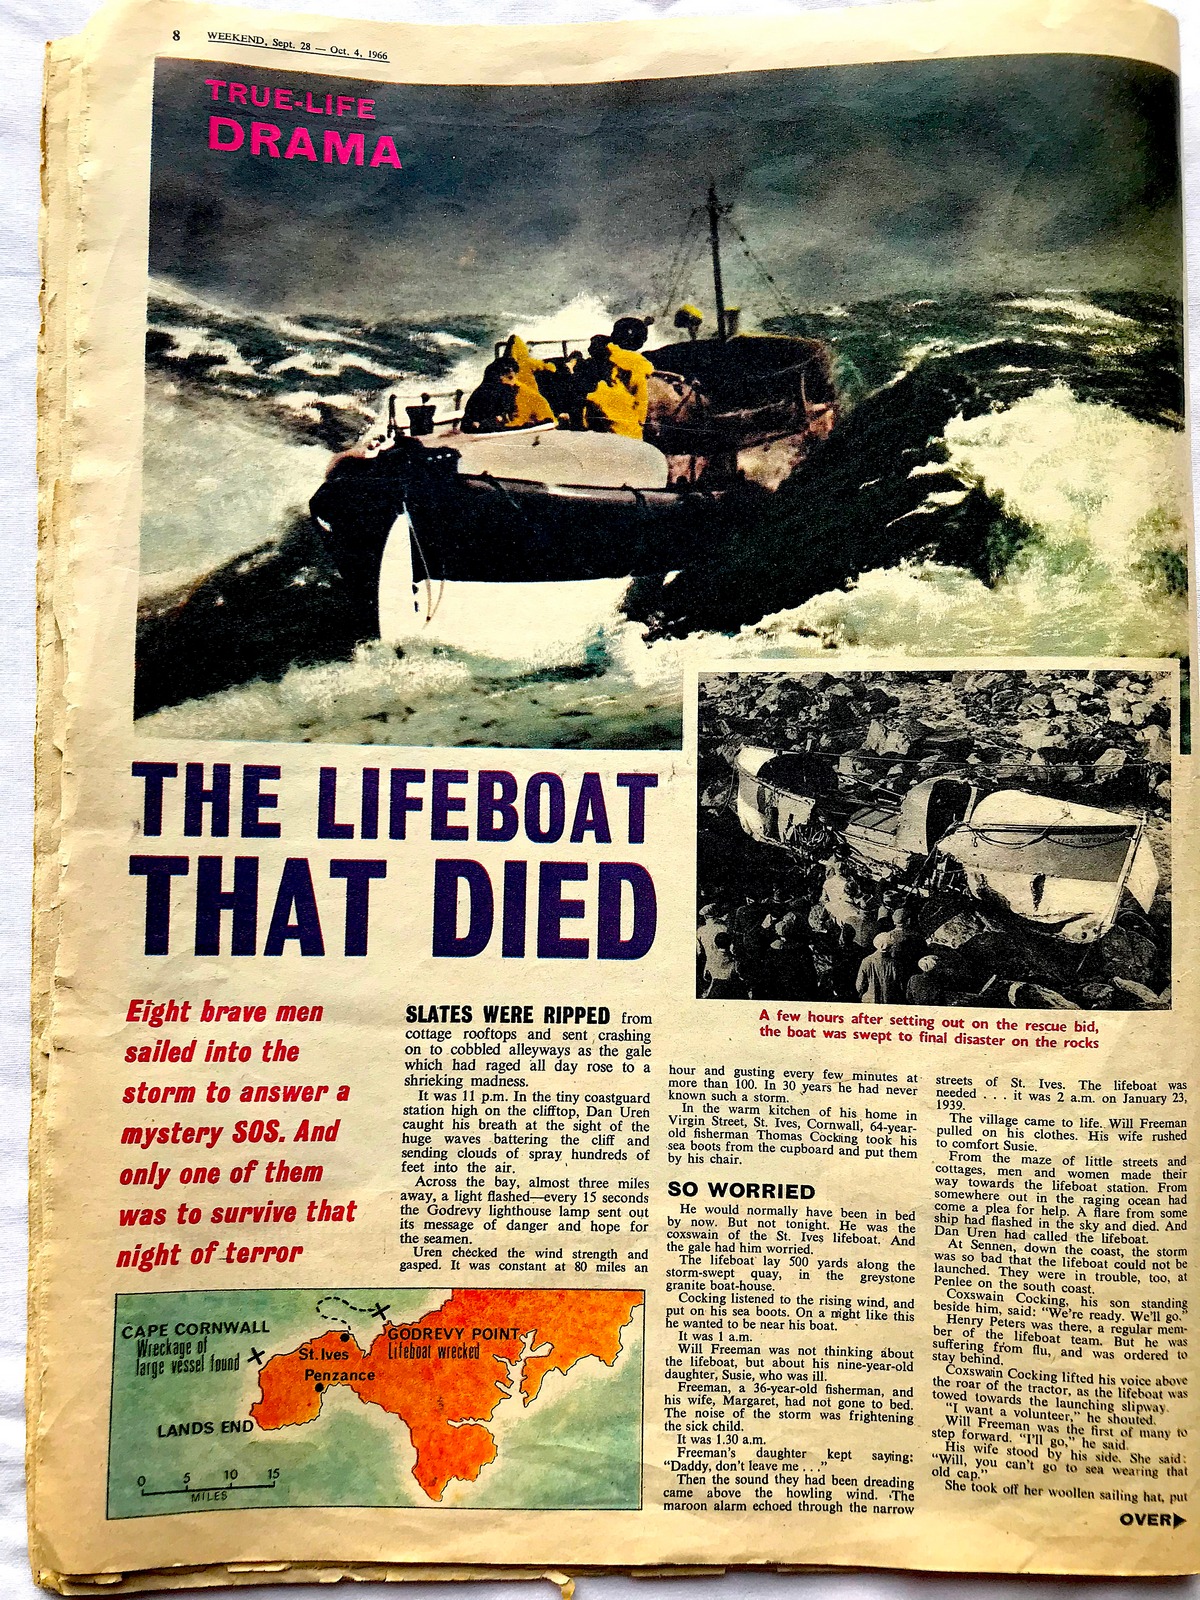 LIfeboat disaster newspaper